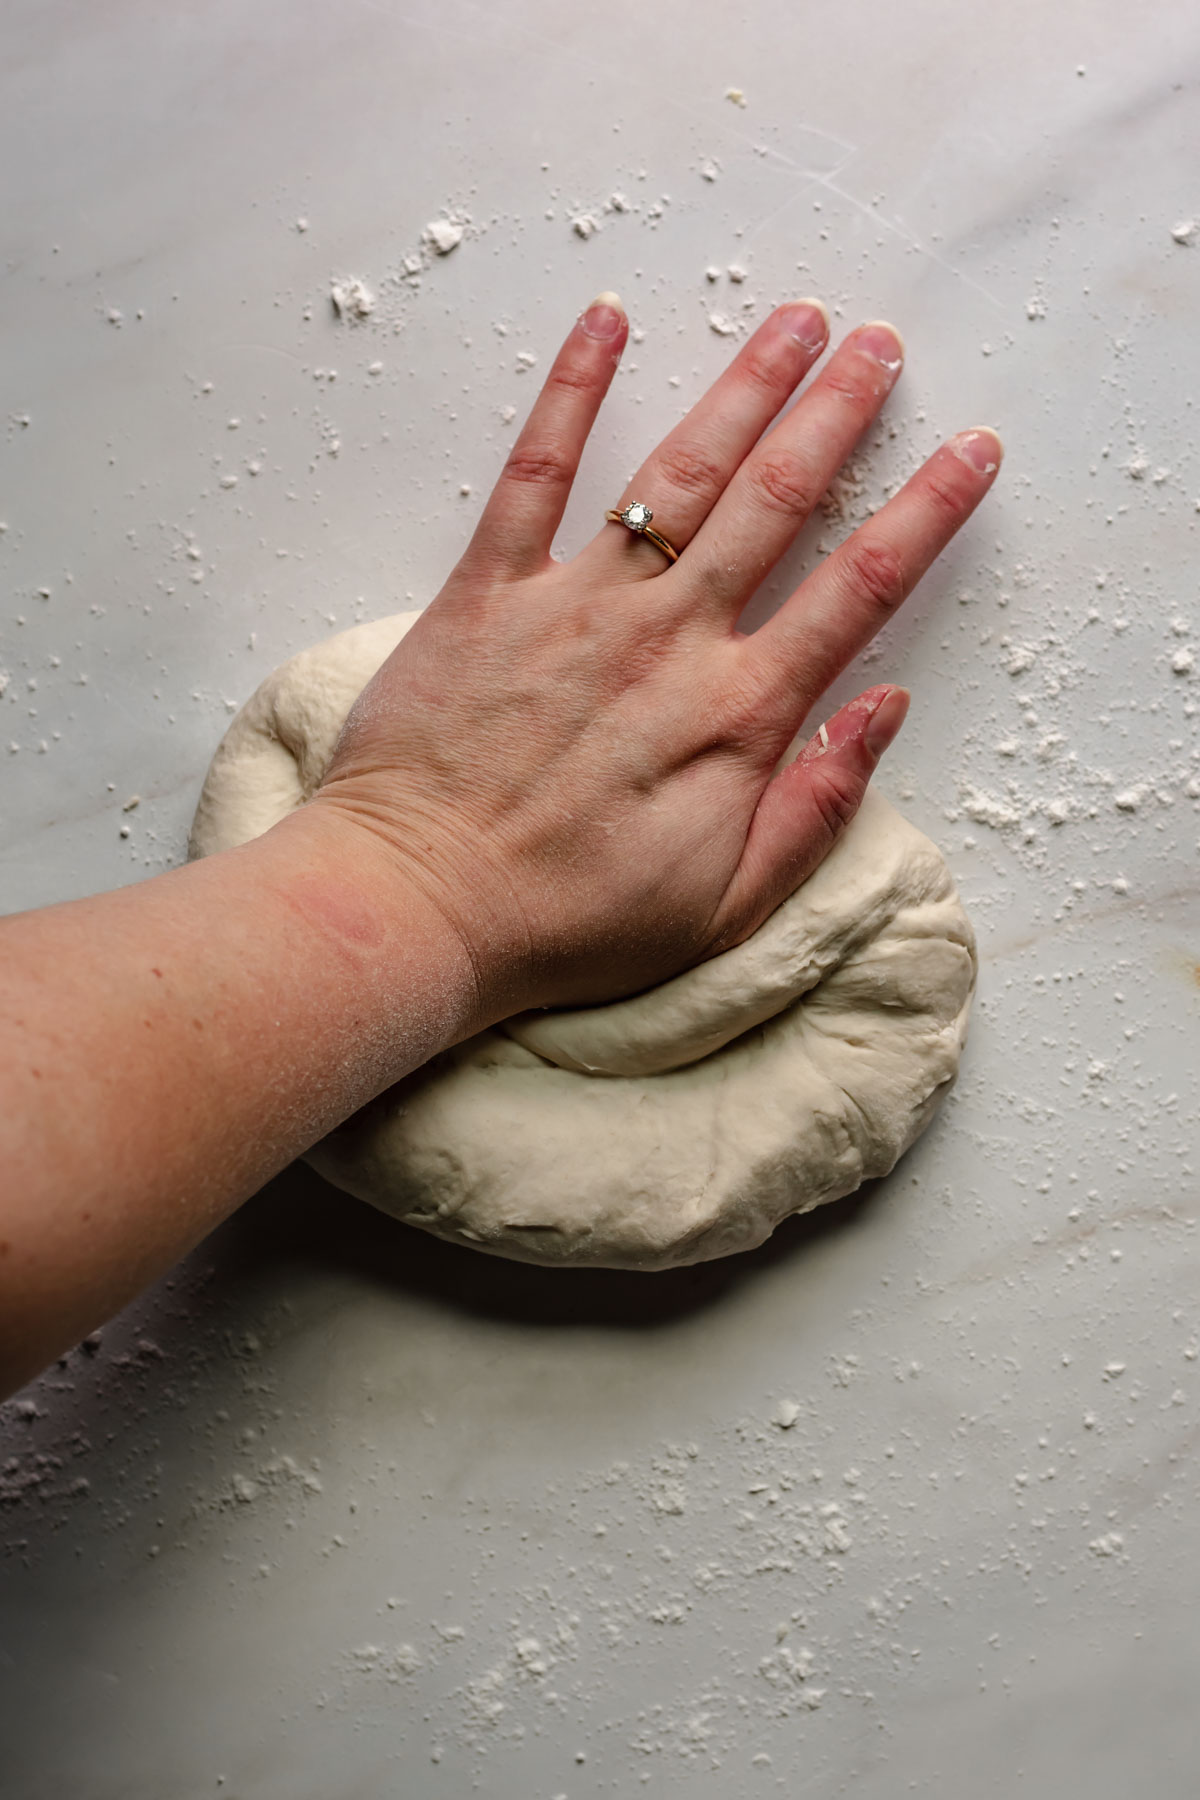 A hand kneading dough.